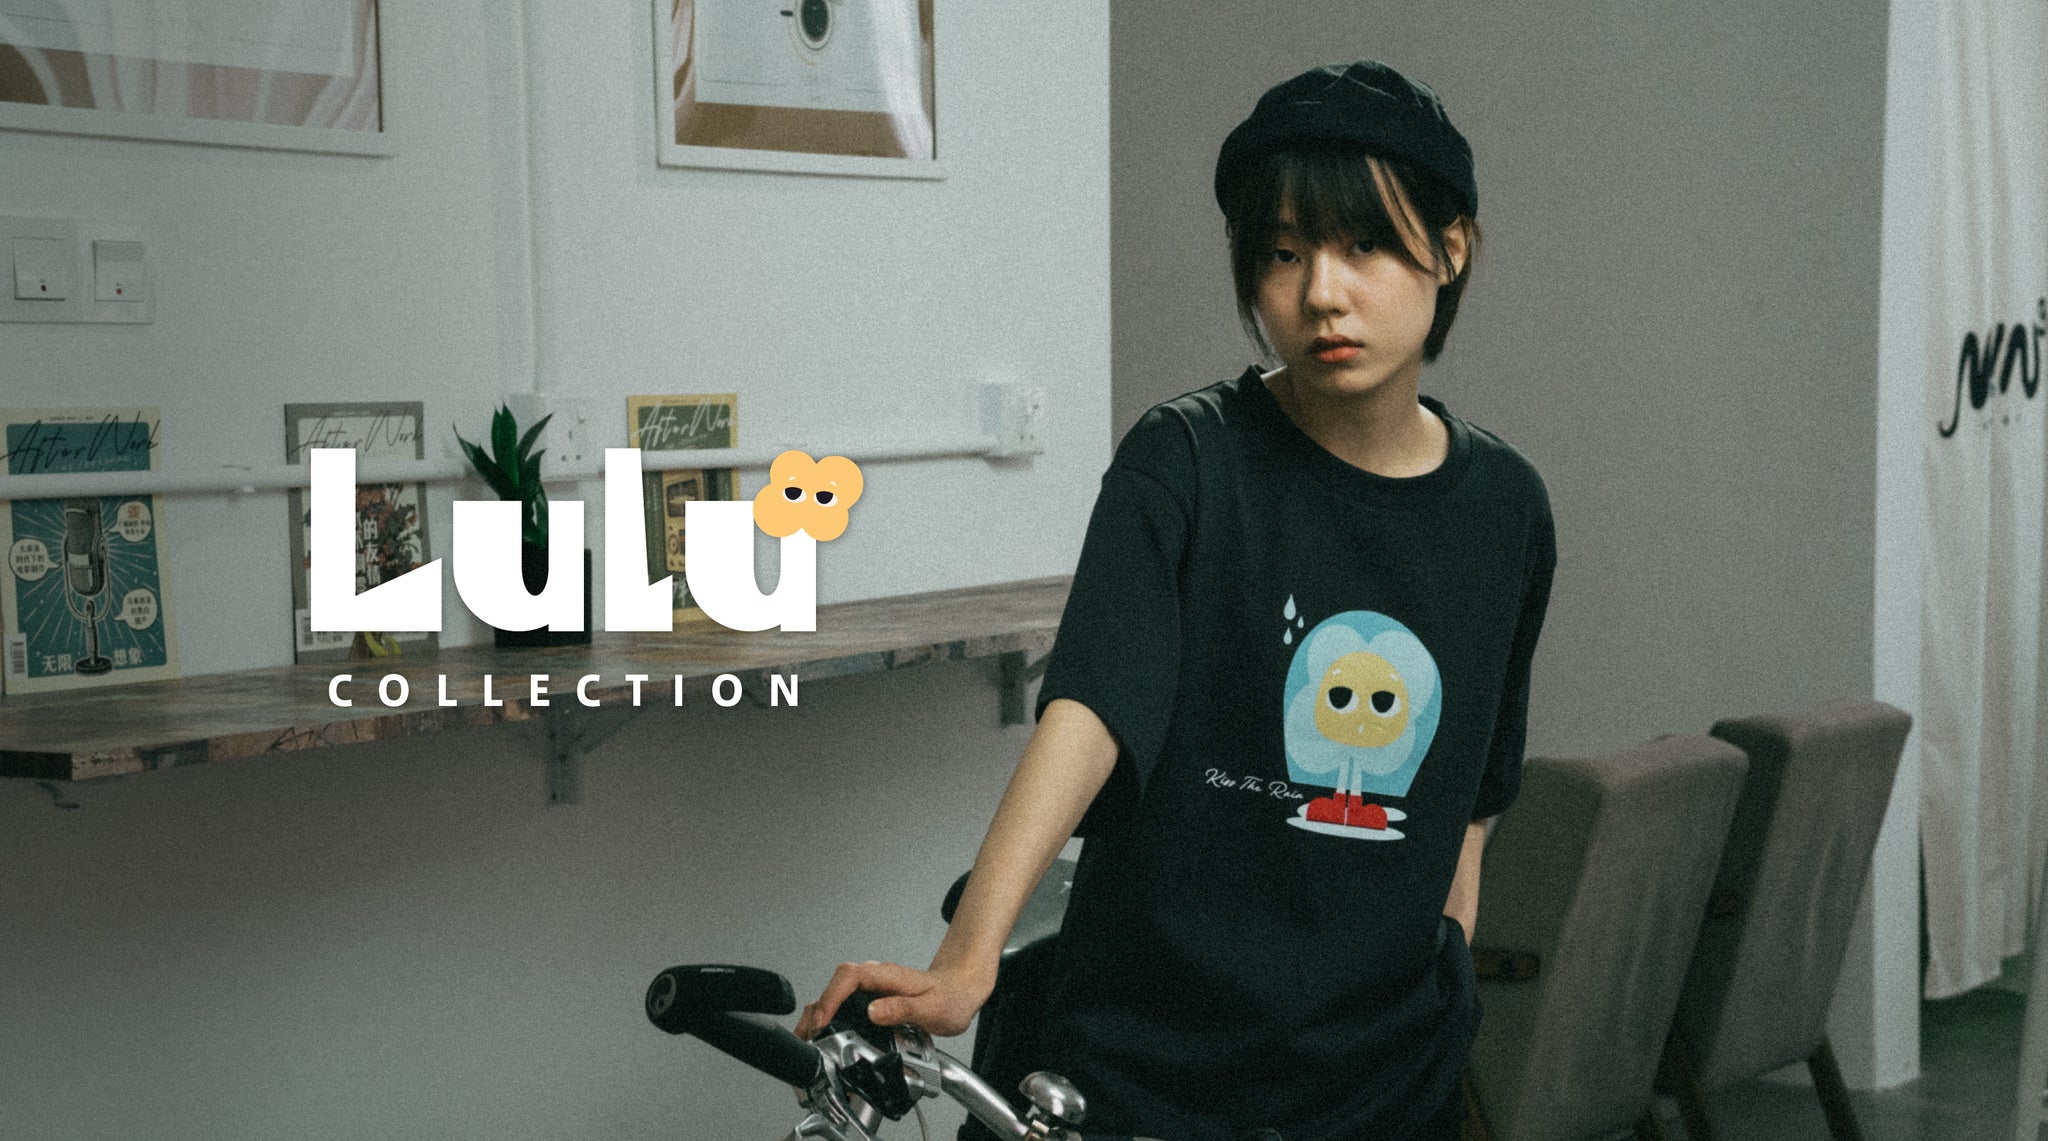 LULU Collection - Life is Good